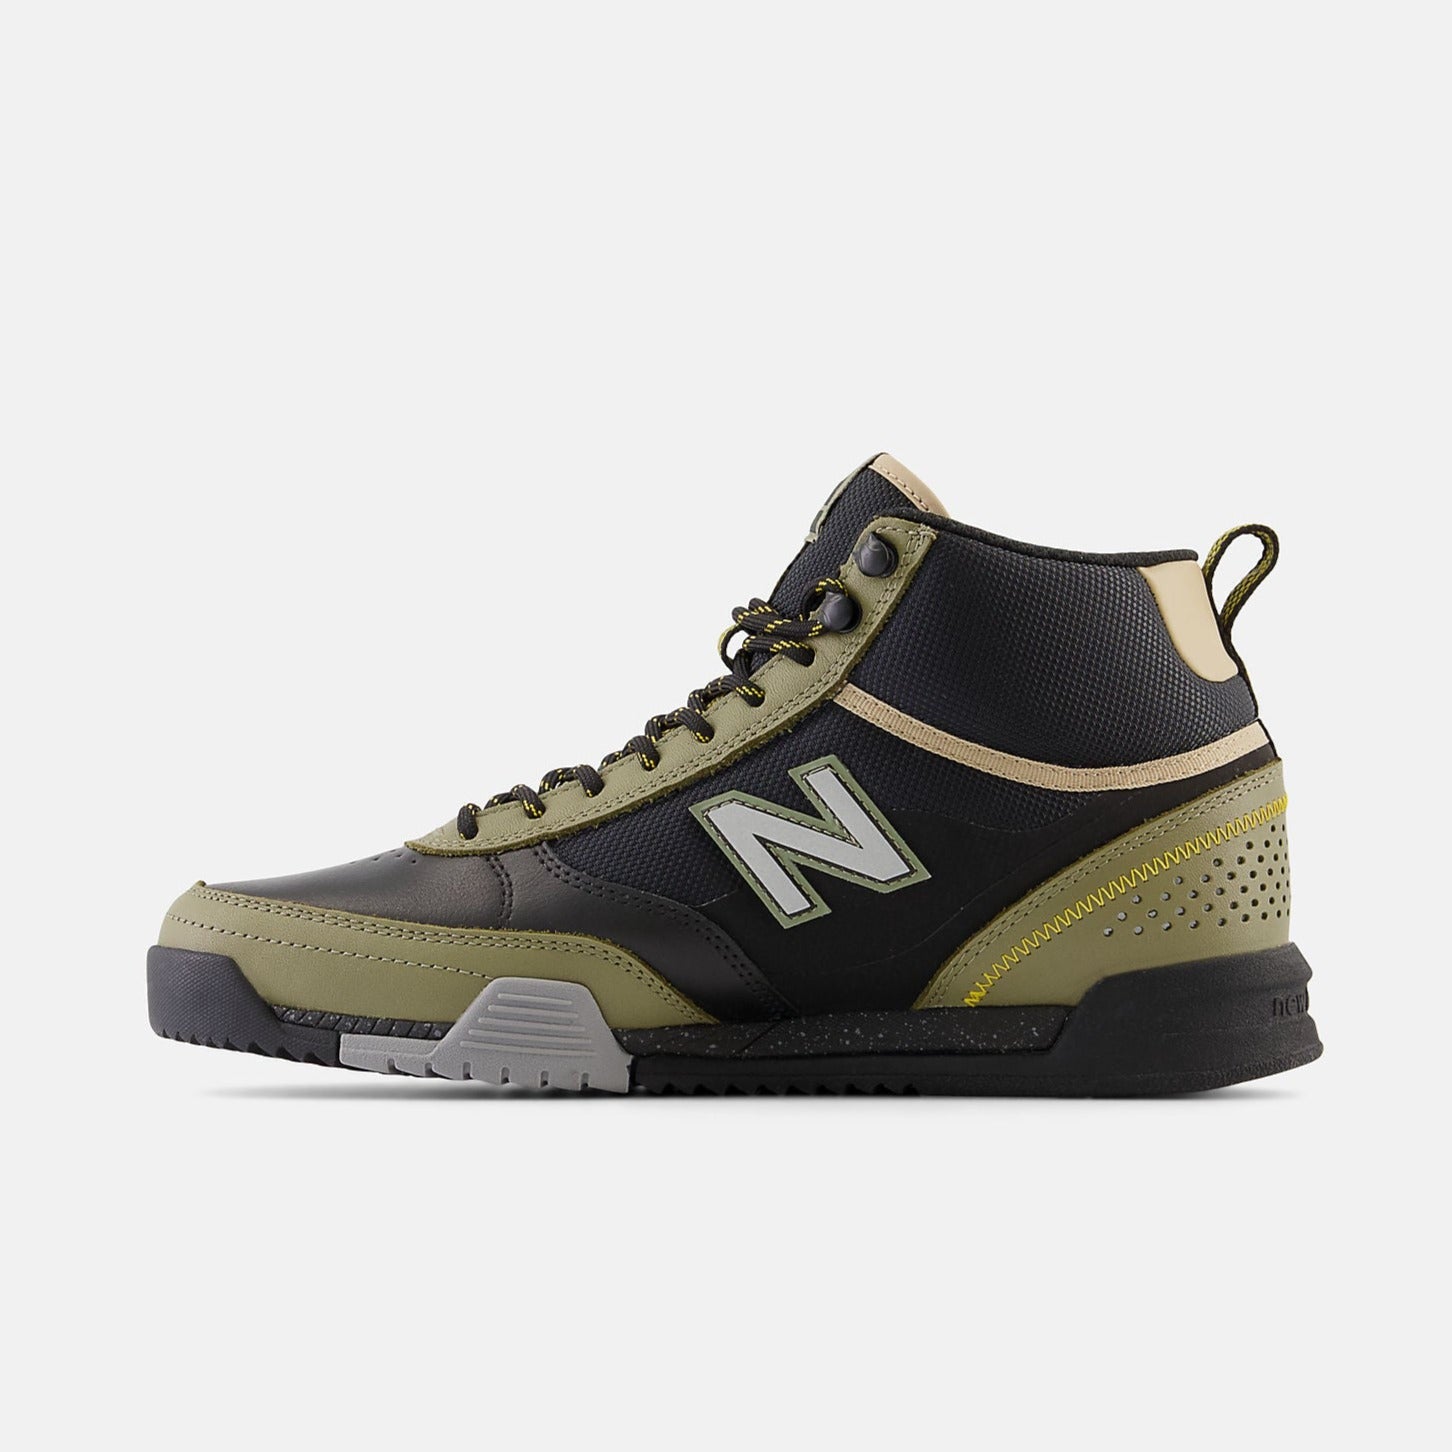 NB Numeric 440 Trail Shoes